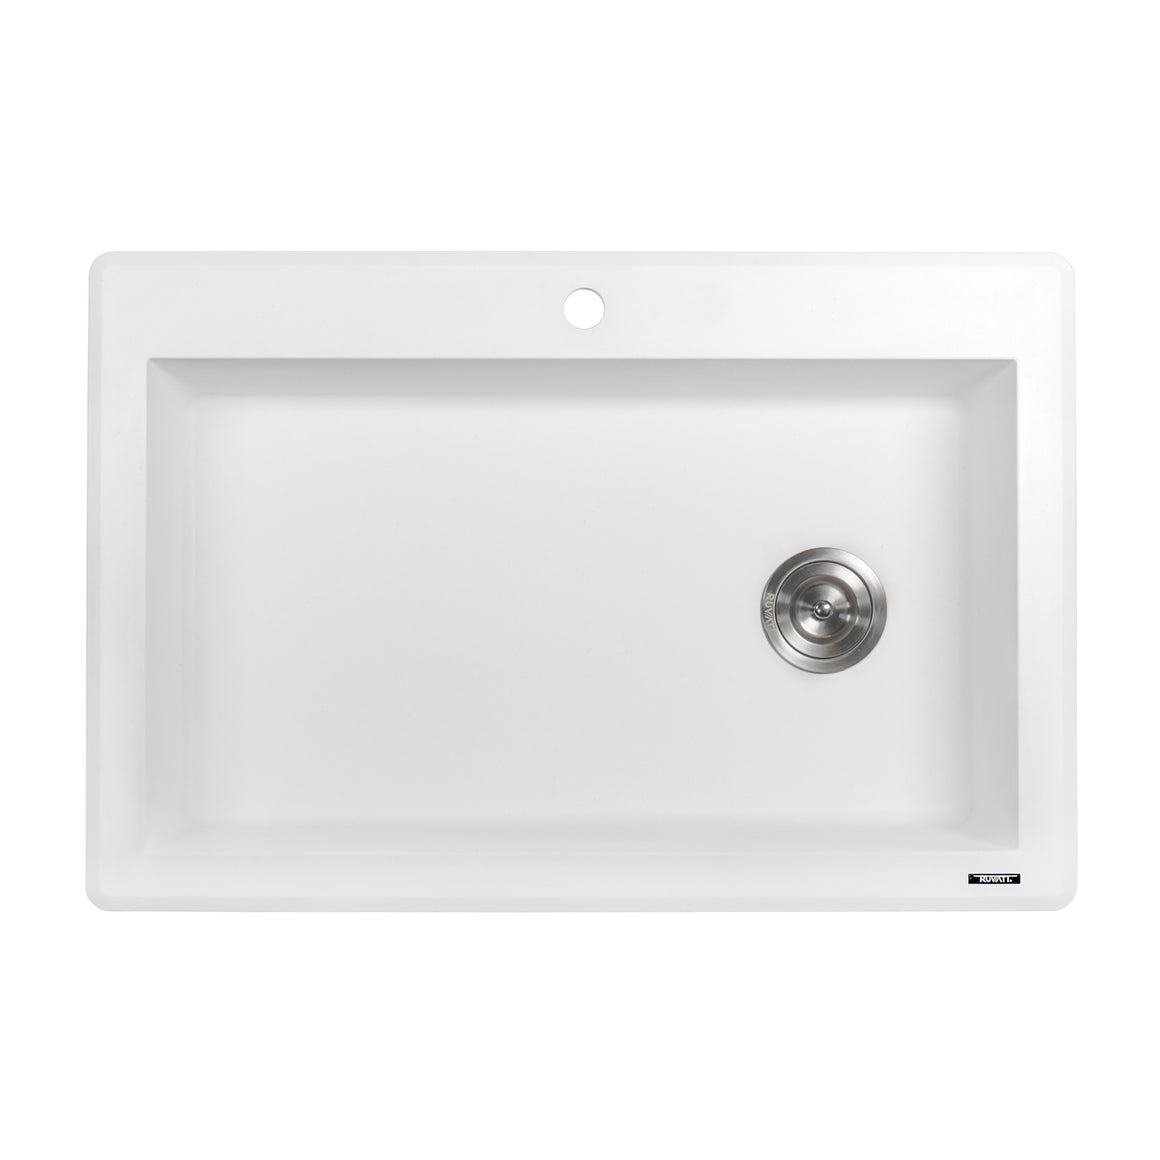 Ruvati 33 x 22 inch epiGranite Dual-Mount Granite Composite Single Bowl Kitchen Sink - Arctic White - RVG1033WH